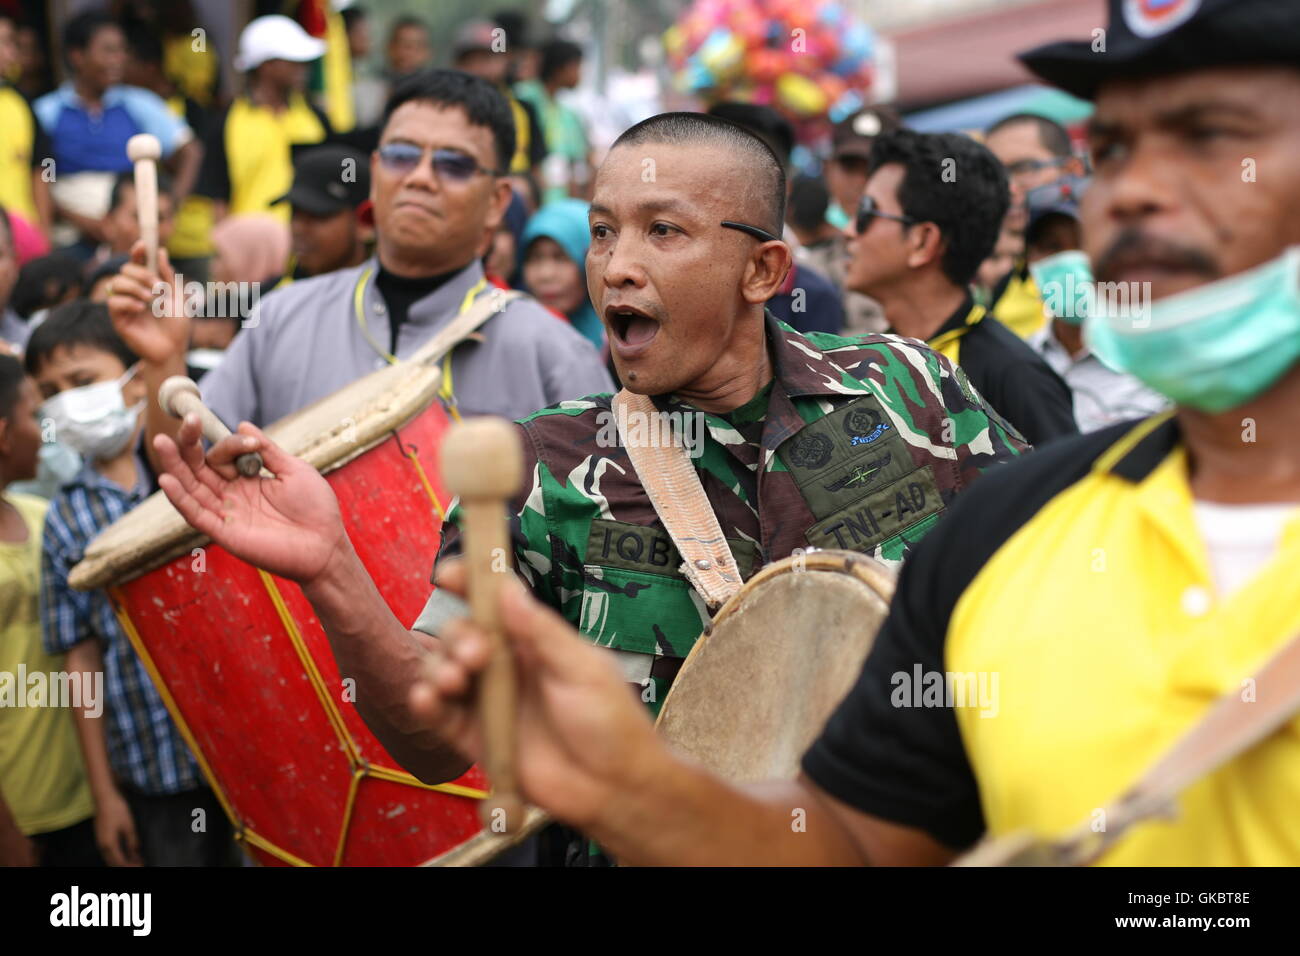 Army playing drum in Pariaman, West Sumatra, Indonesia. Photo by Yuli Seperi/Alamy Stock Photo